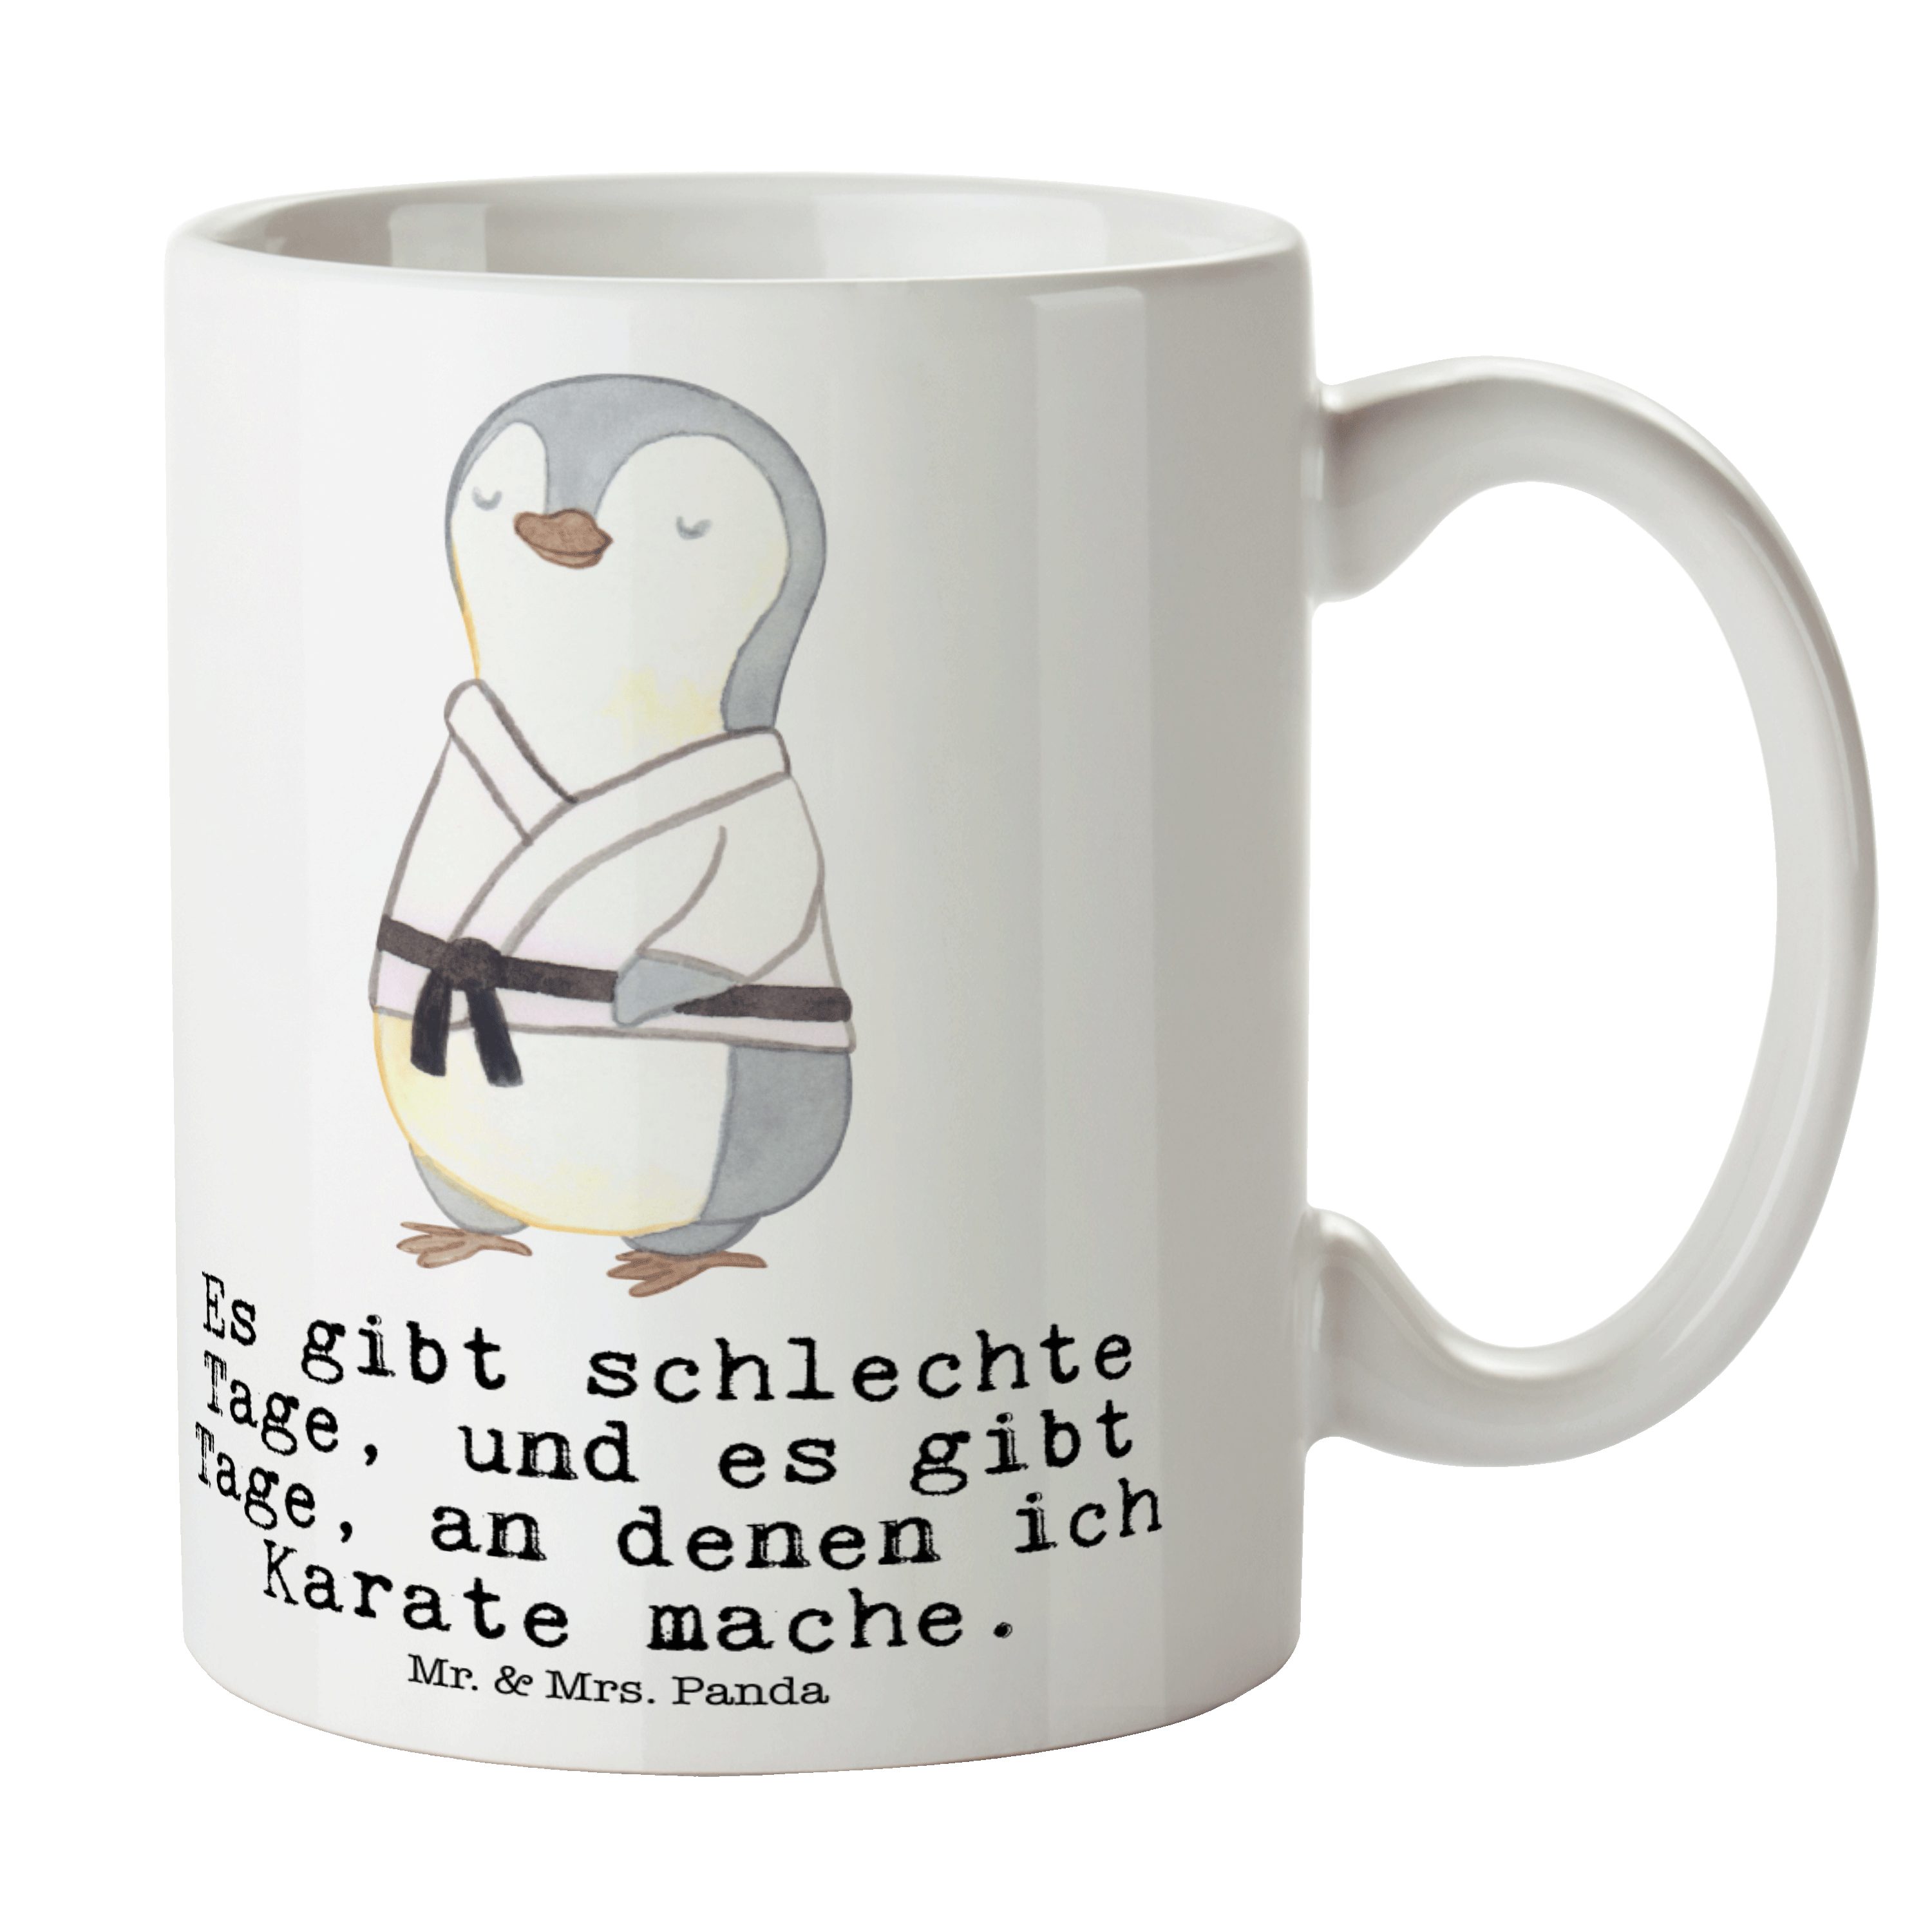 Mr. & Mrs. Panda Tasse Pinguin Karate Tage - Weiß - Geschenk, Tasse, Kampfkunst, Sportler, B, Keramik